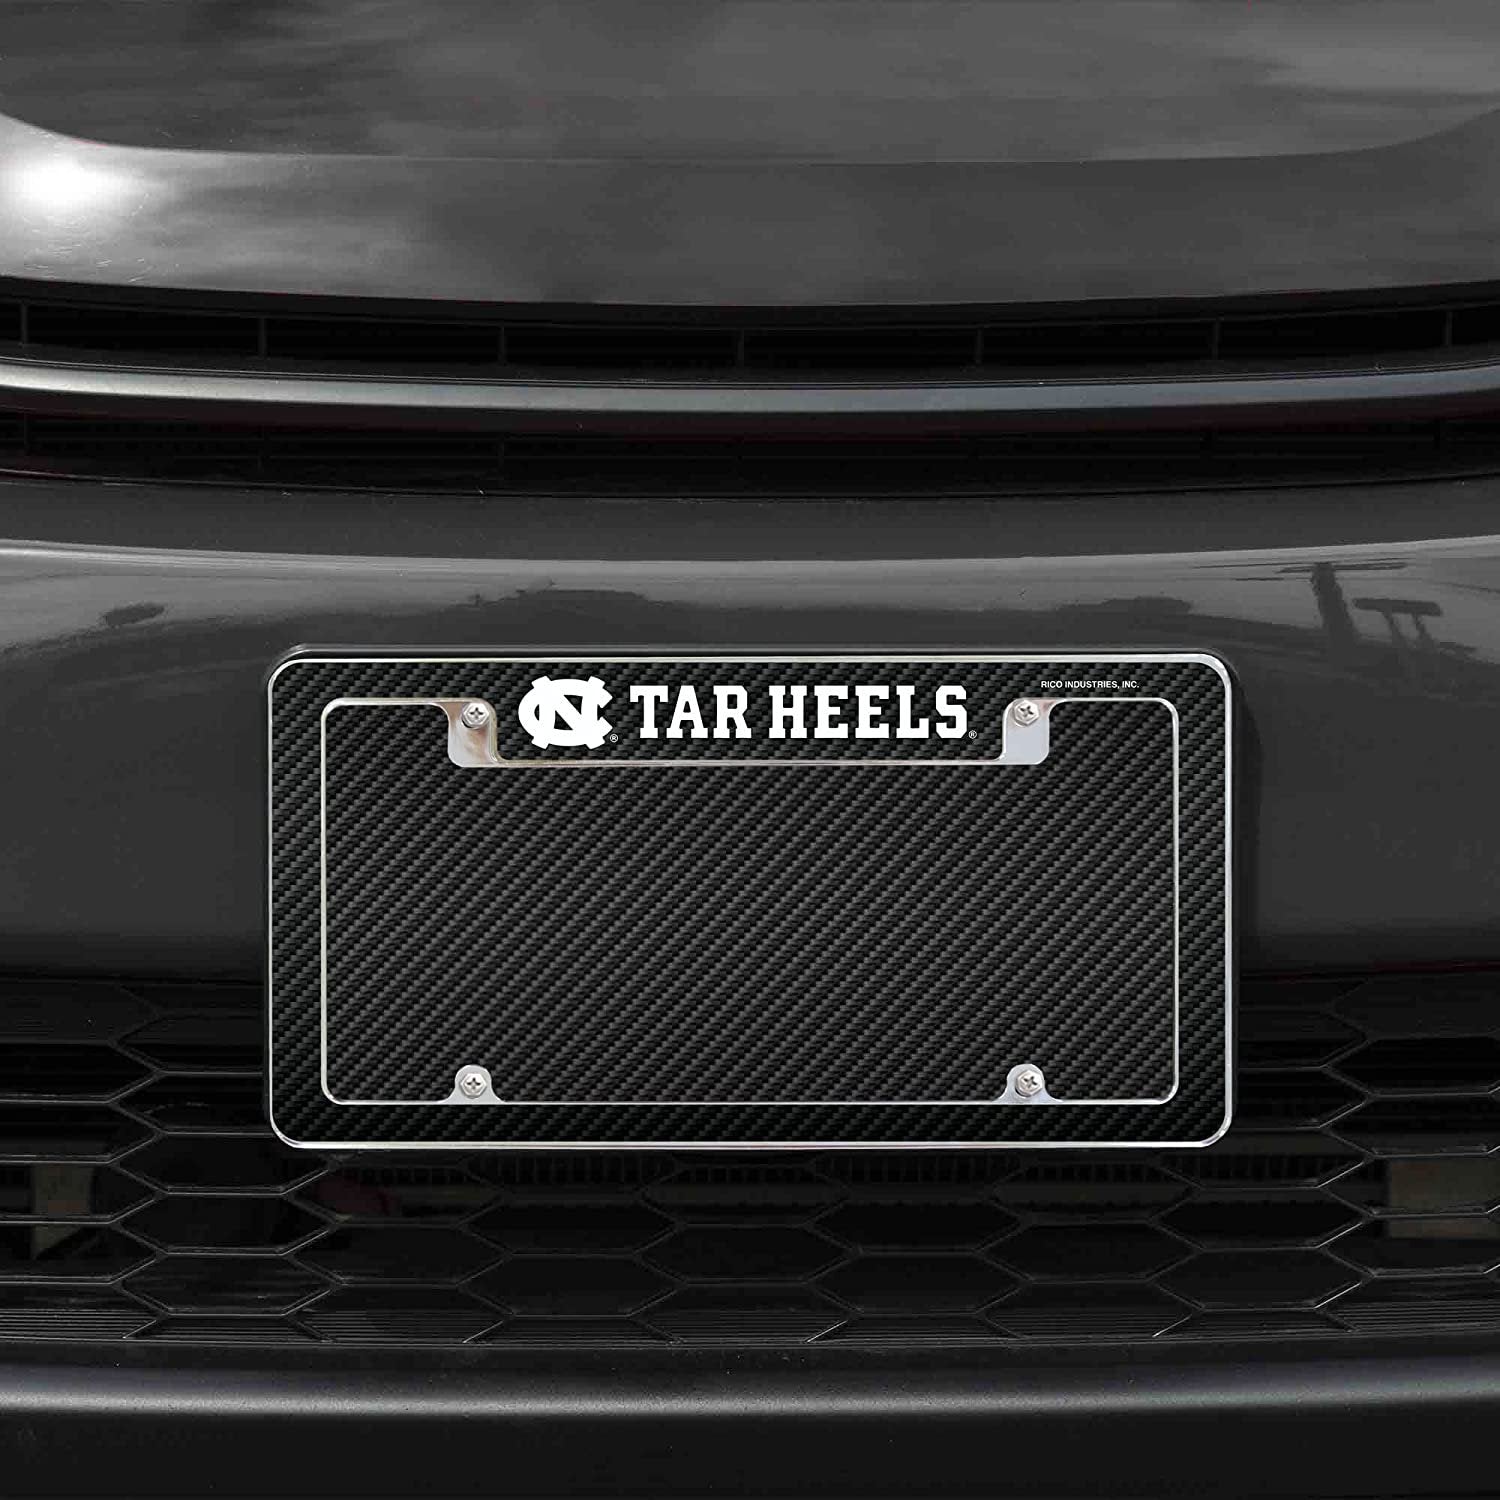 University of North Carolina Tar Heels Metal License Plate Frame Chrome Tag Cover Carbon Fiber Design 6x12 Inch